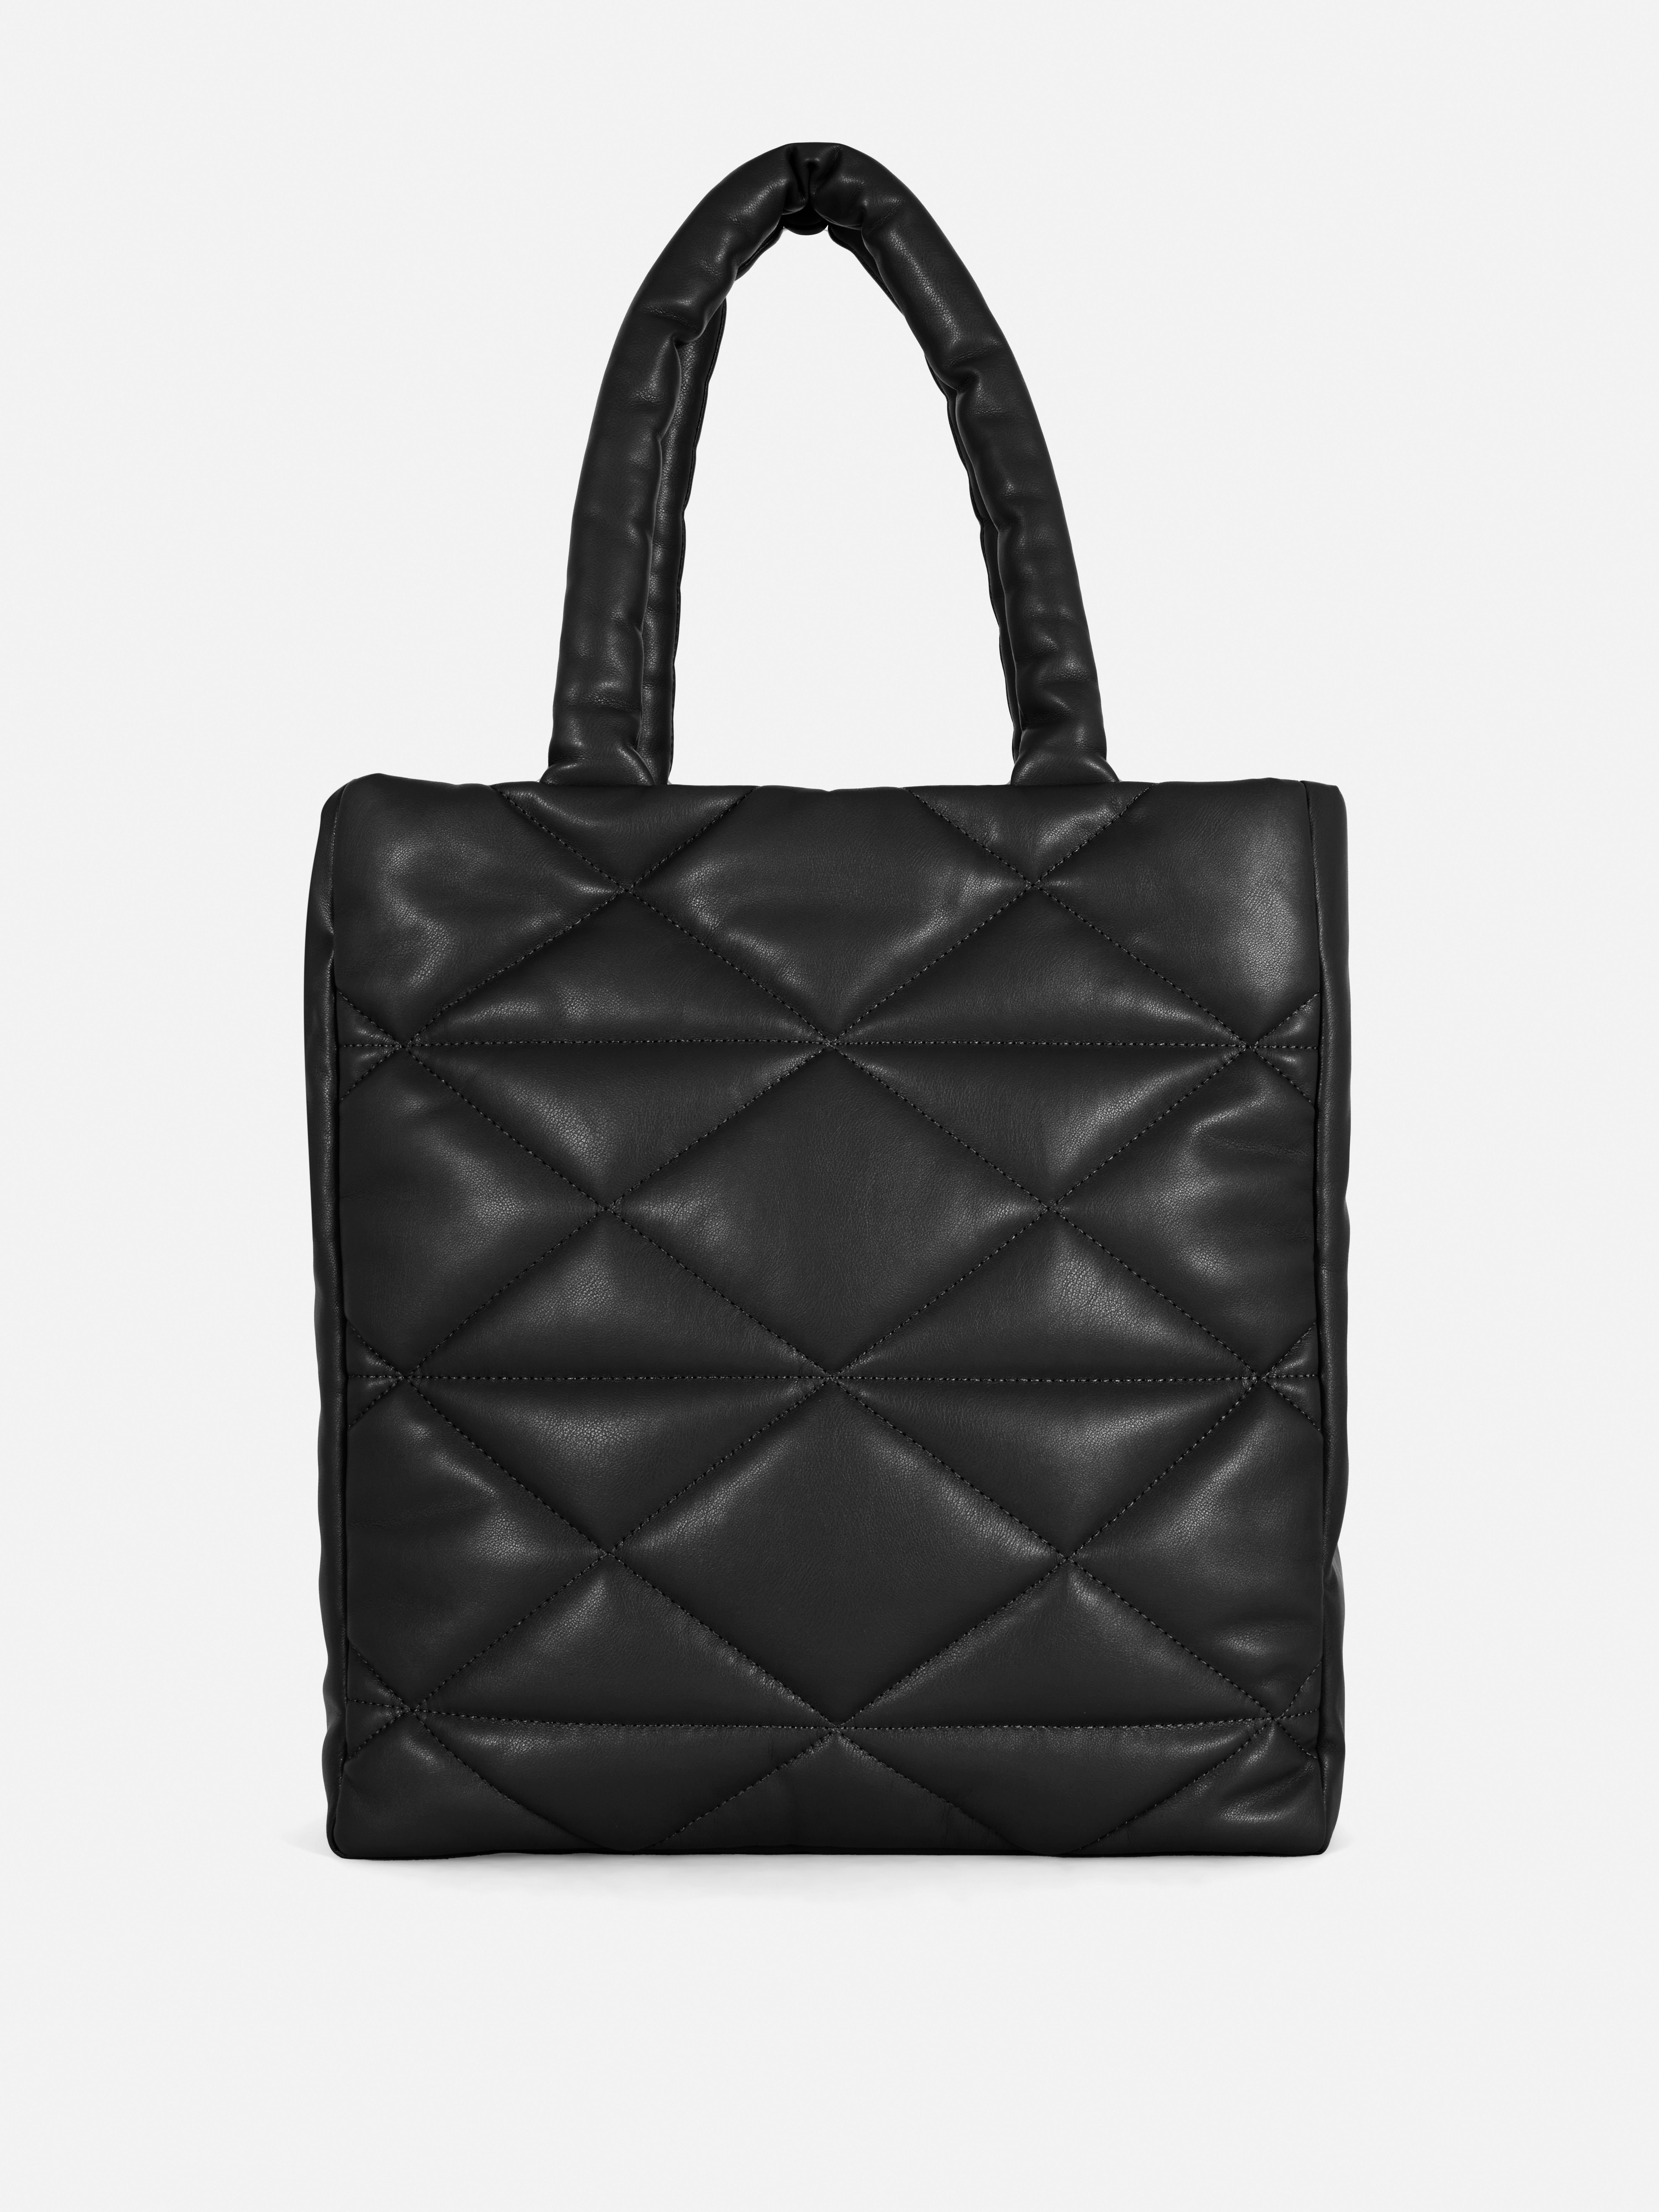 Rita Ora Quilted Shopper Bag